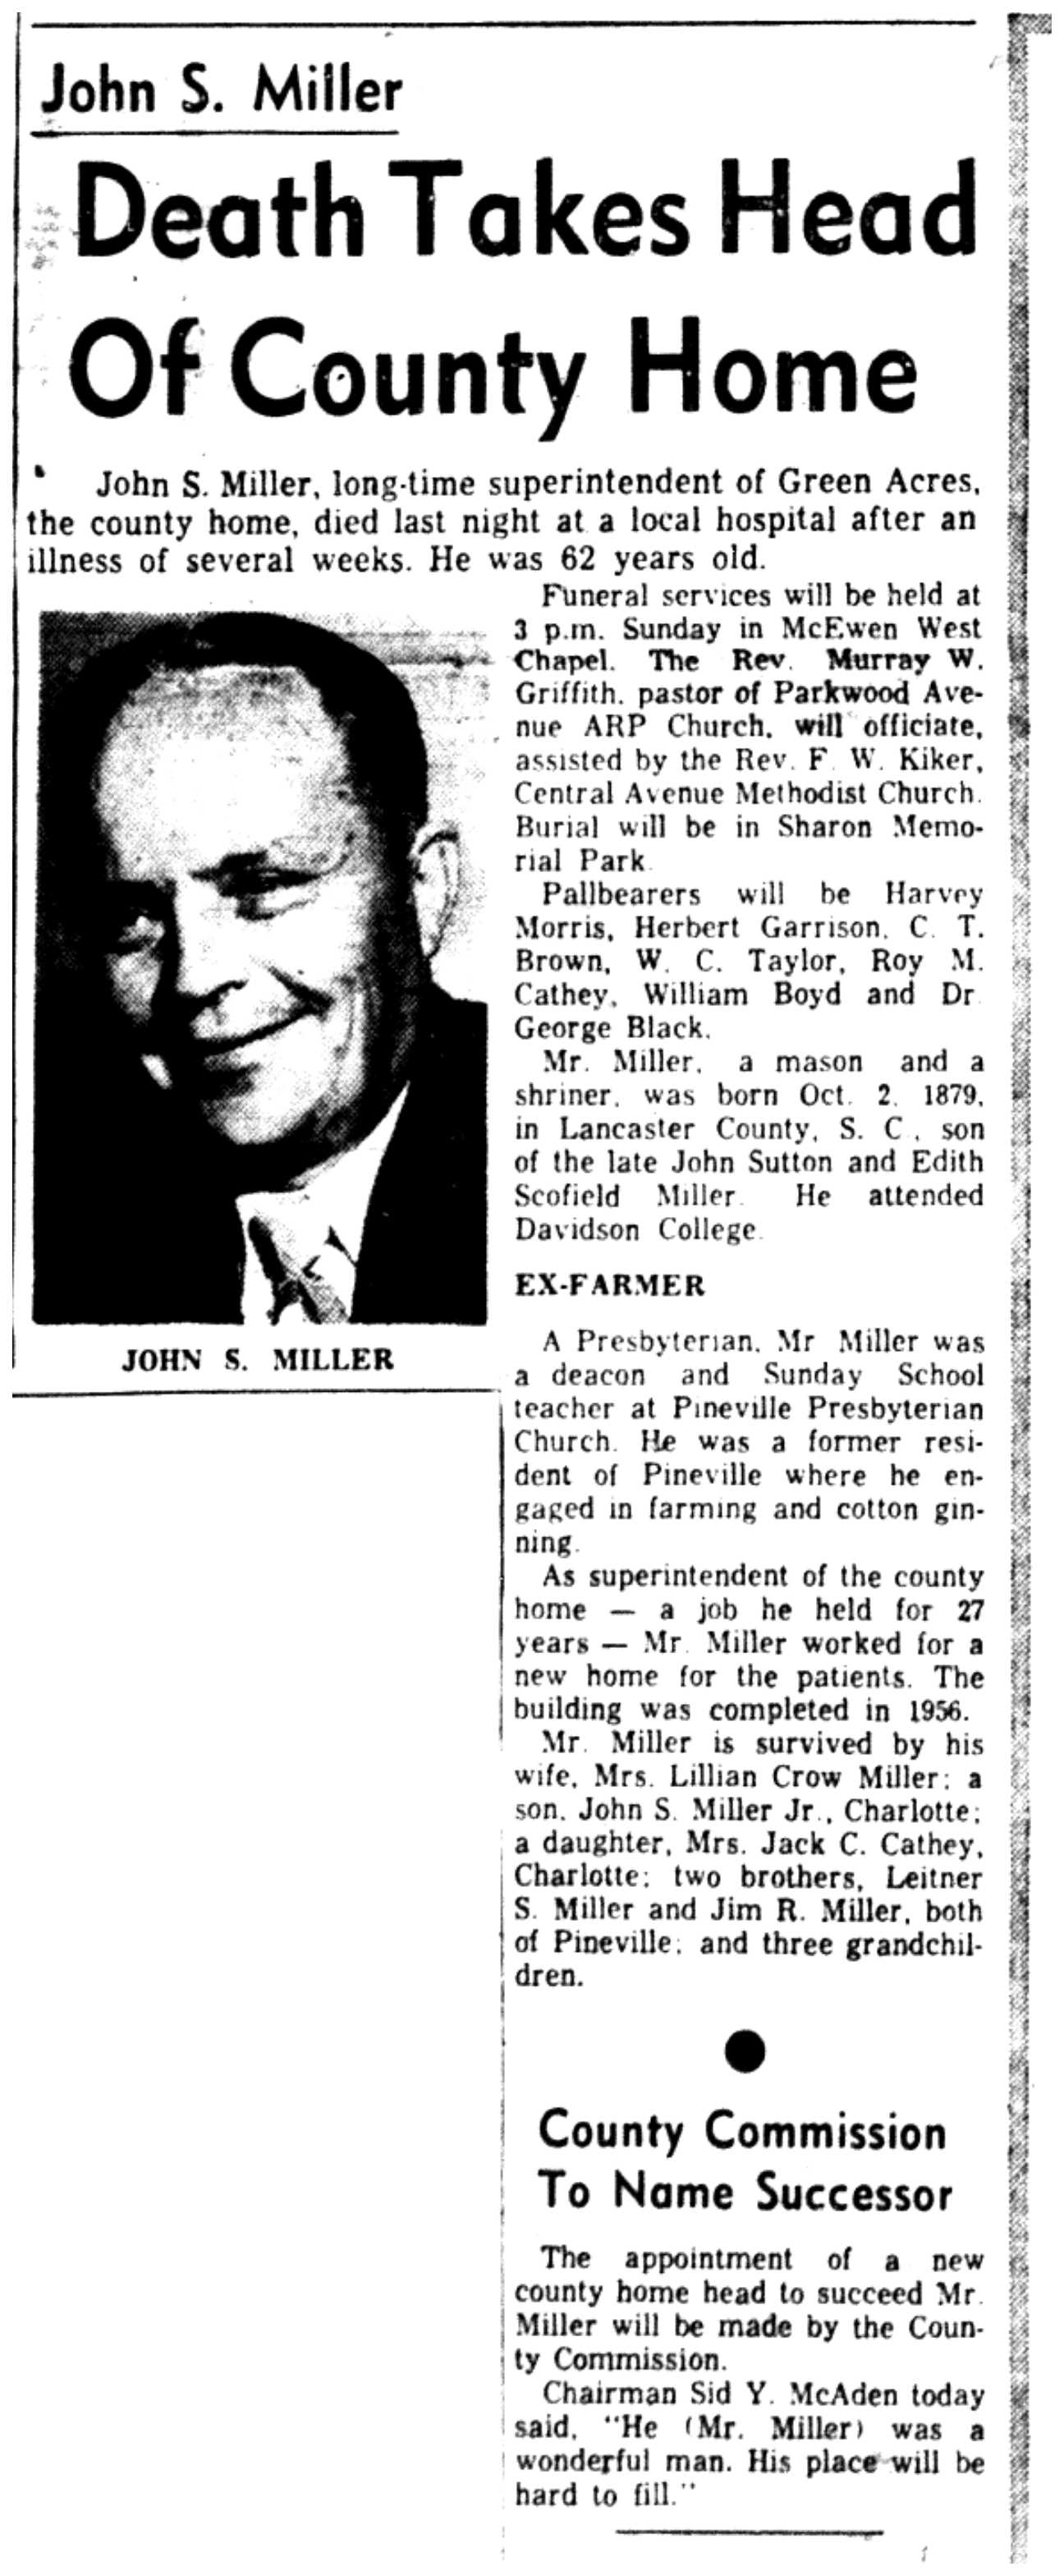 Charlotte News, March 11, 1960, p.1B